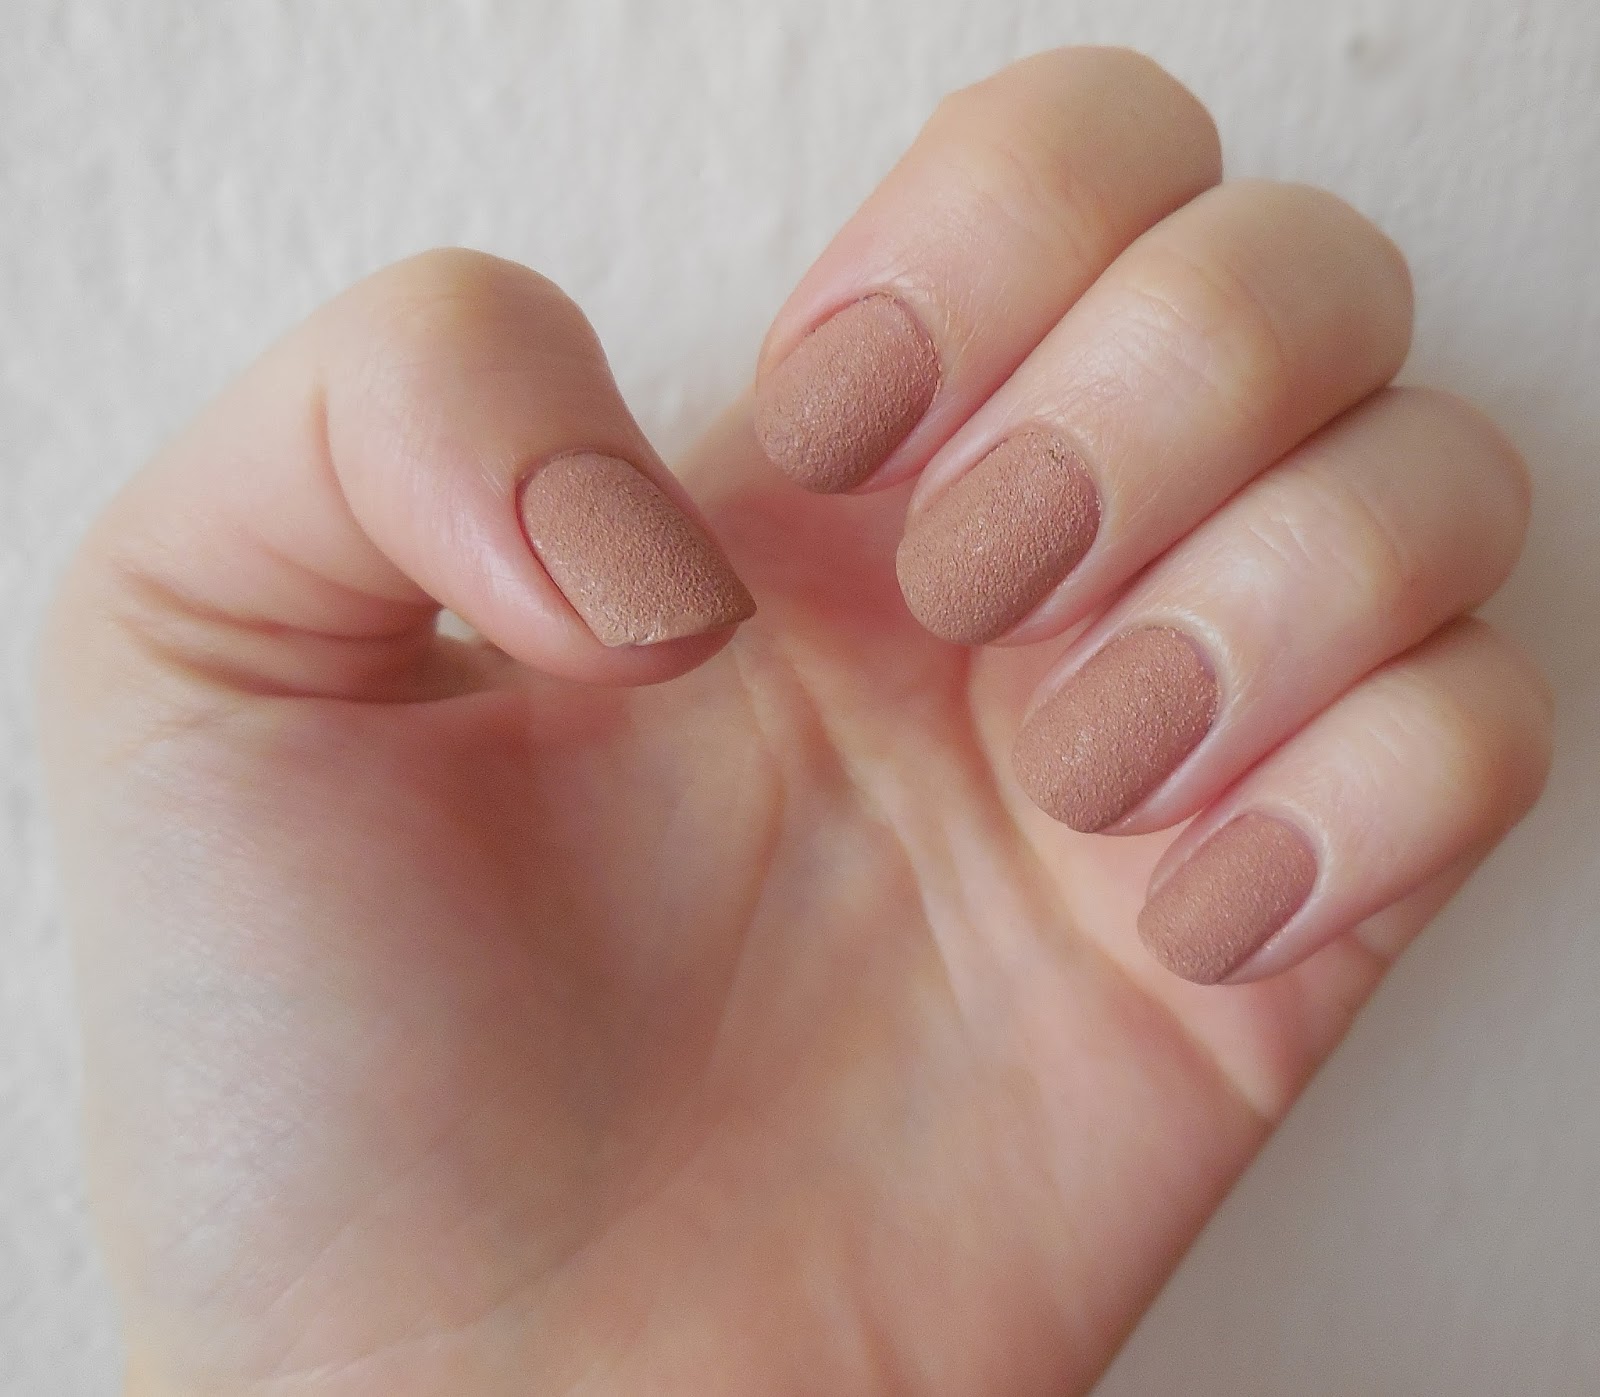 Kosmetika Recenze Blog Blogspot Cz Krasny Nude Piskovy Lak Fantasy Nails